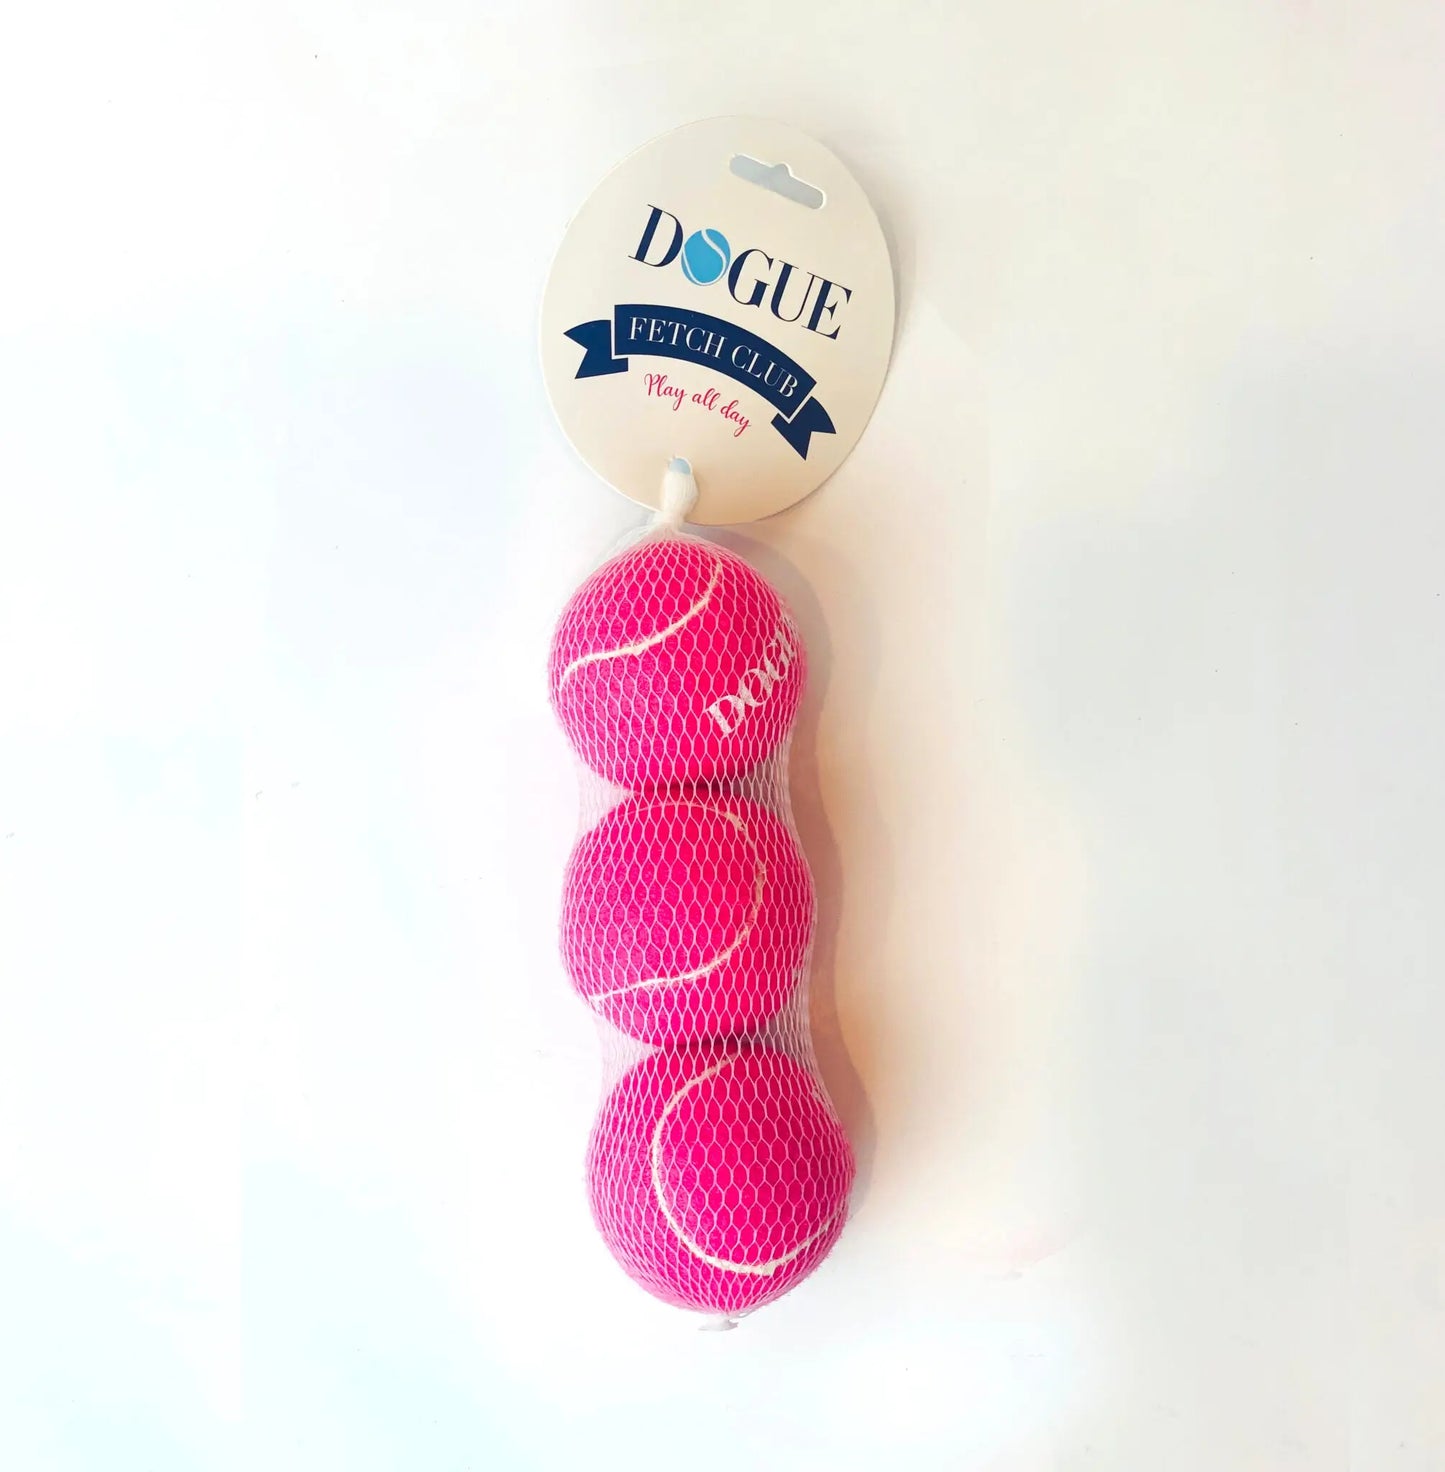 DOGUE | Tennis Balls | Buy Online at DOGUE Australia